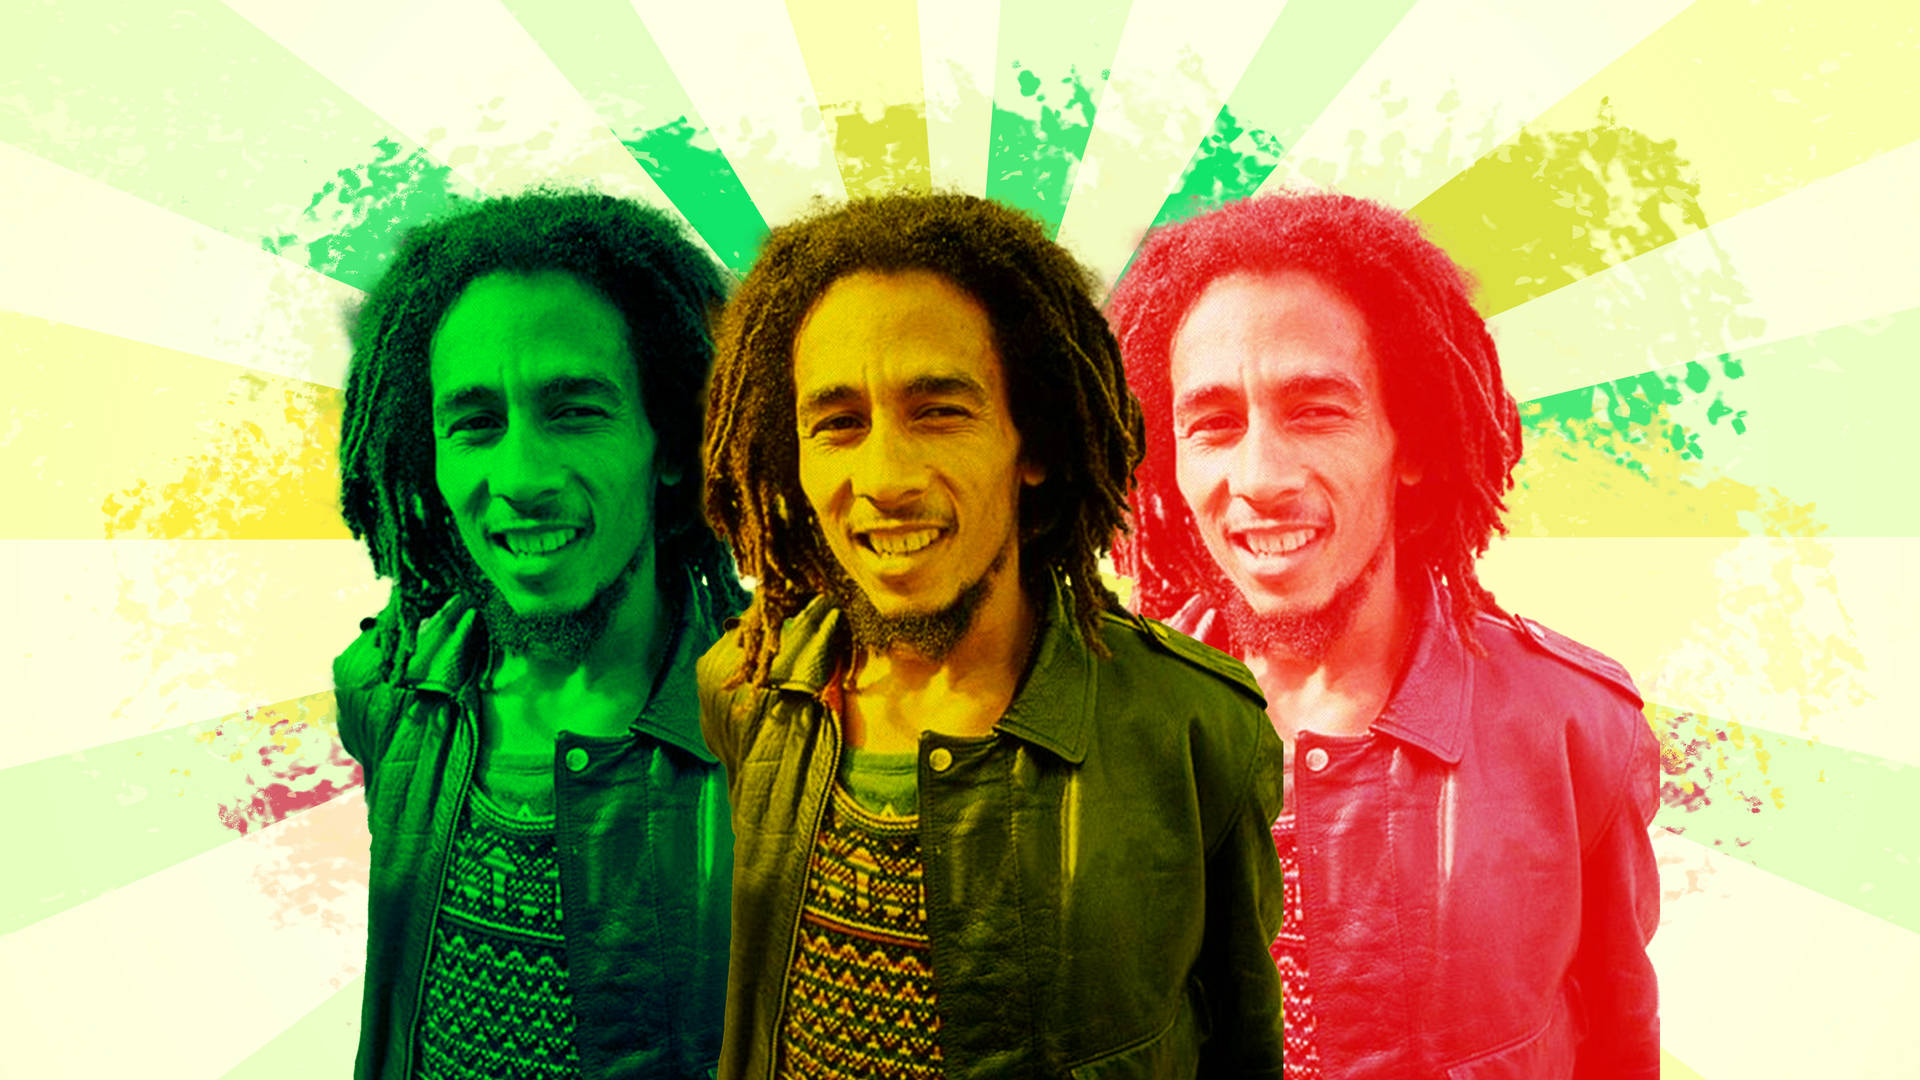 Papelde Parede De Tunel Listrado Do Bob Marley. Papel de Parede